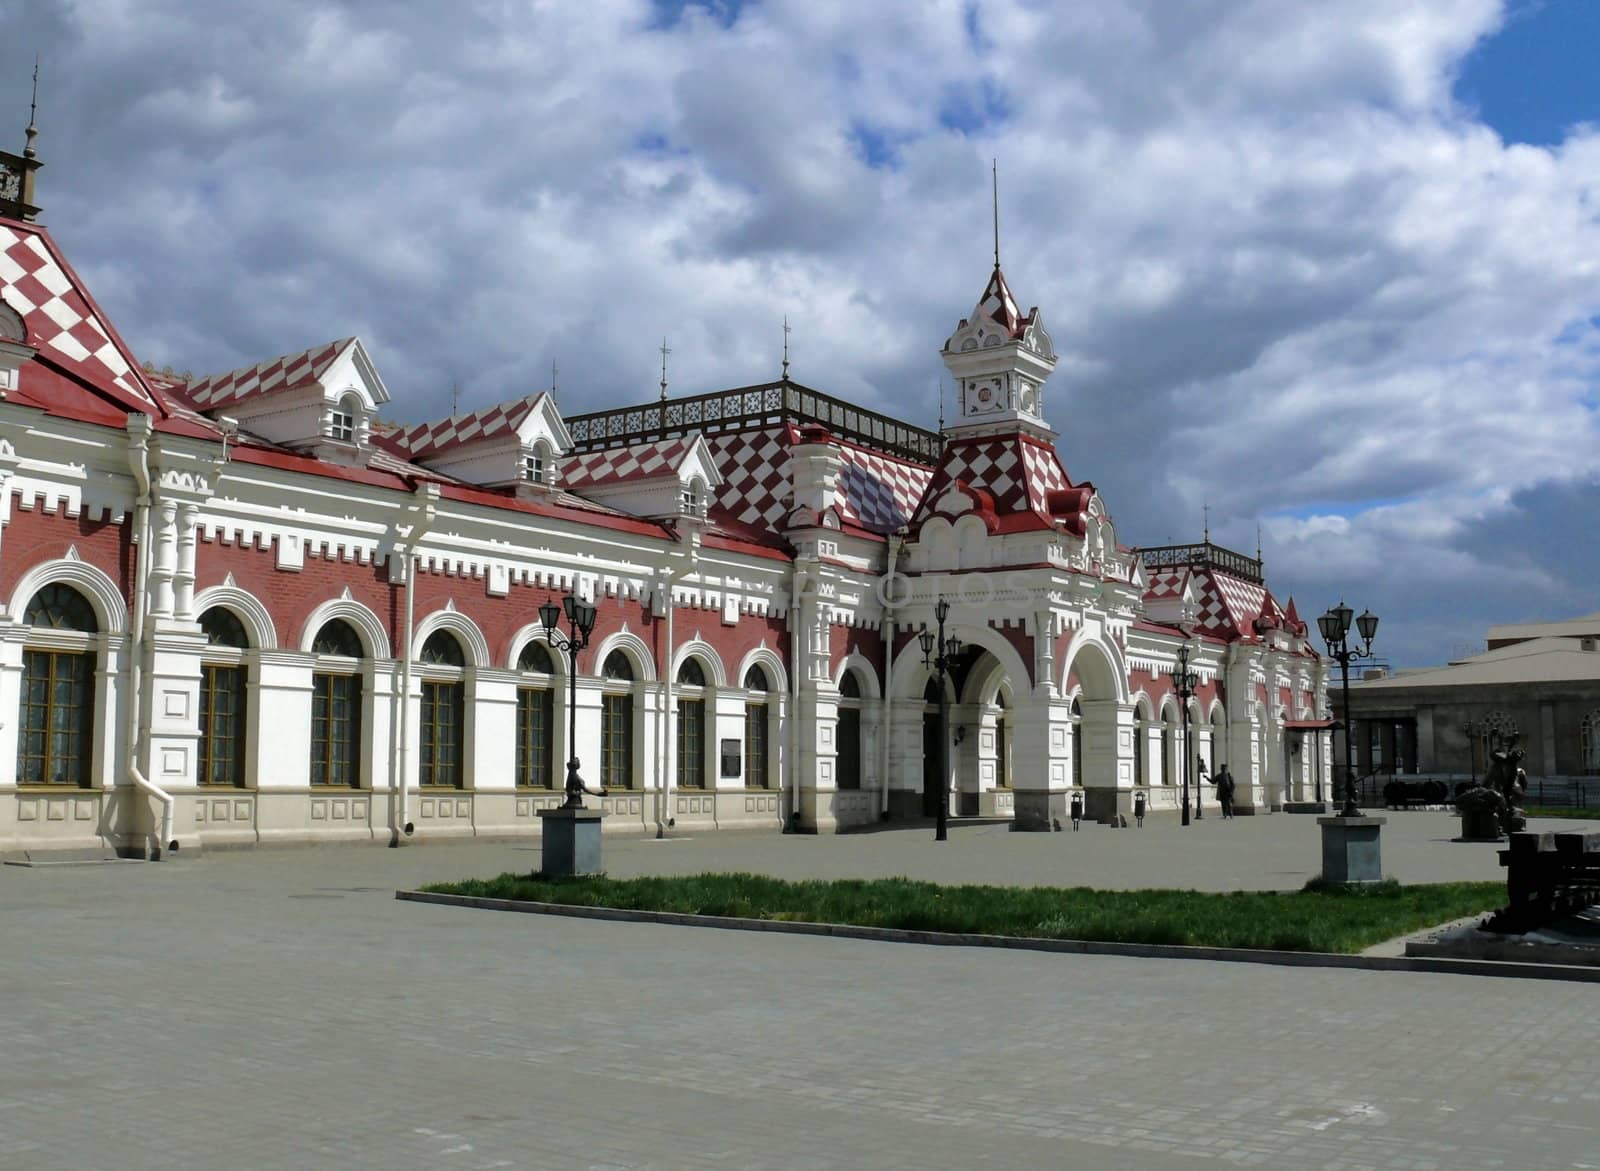 Facade of old railway station - Yekaterinburg by Stoyanov